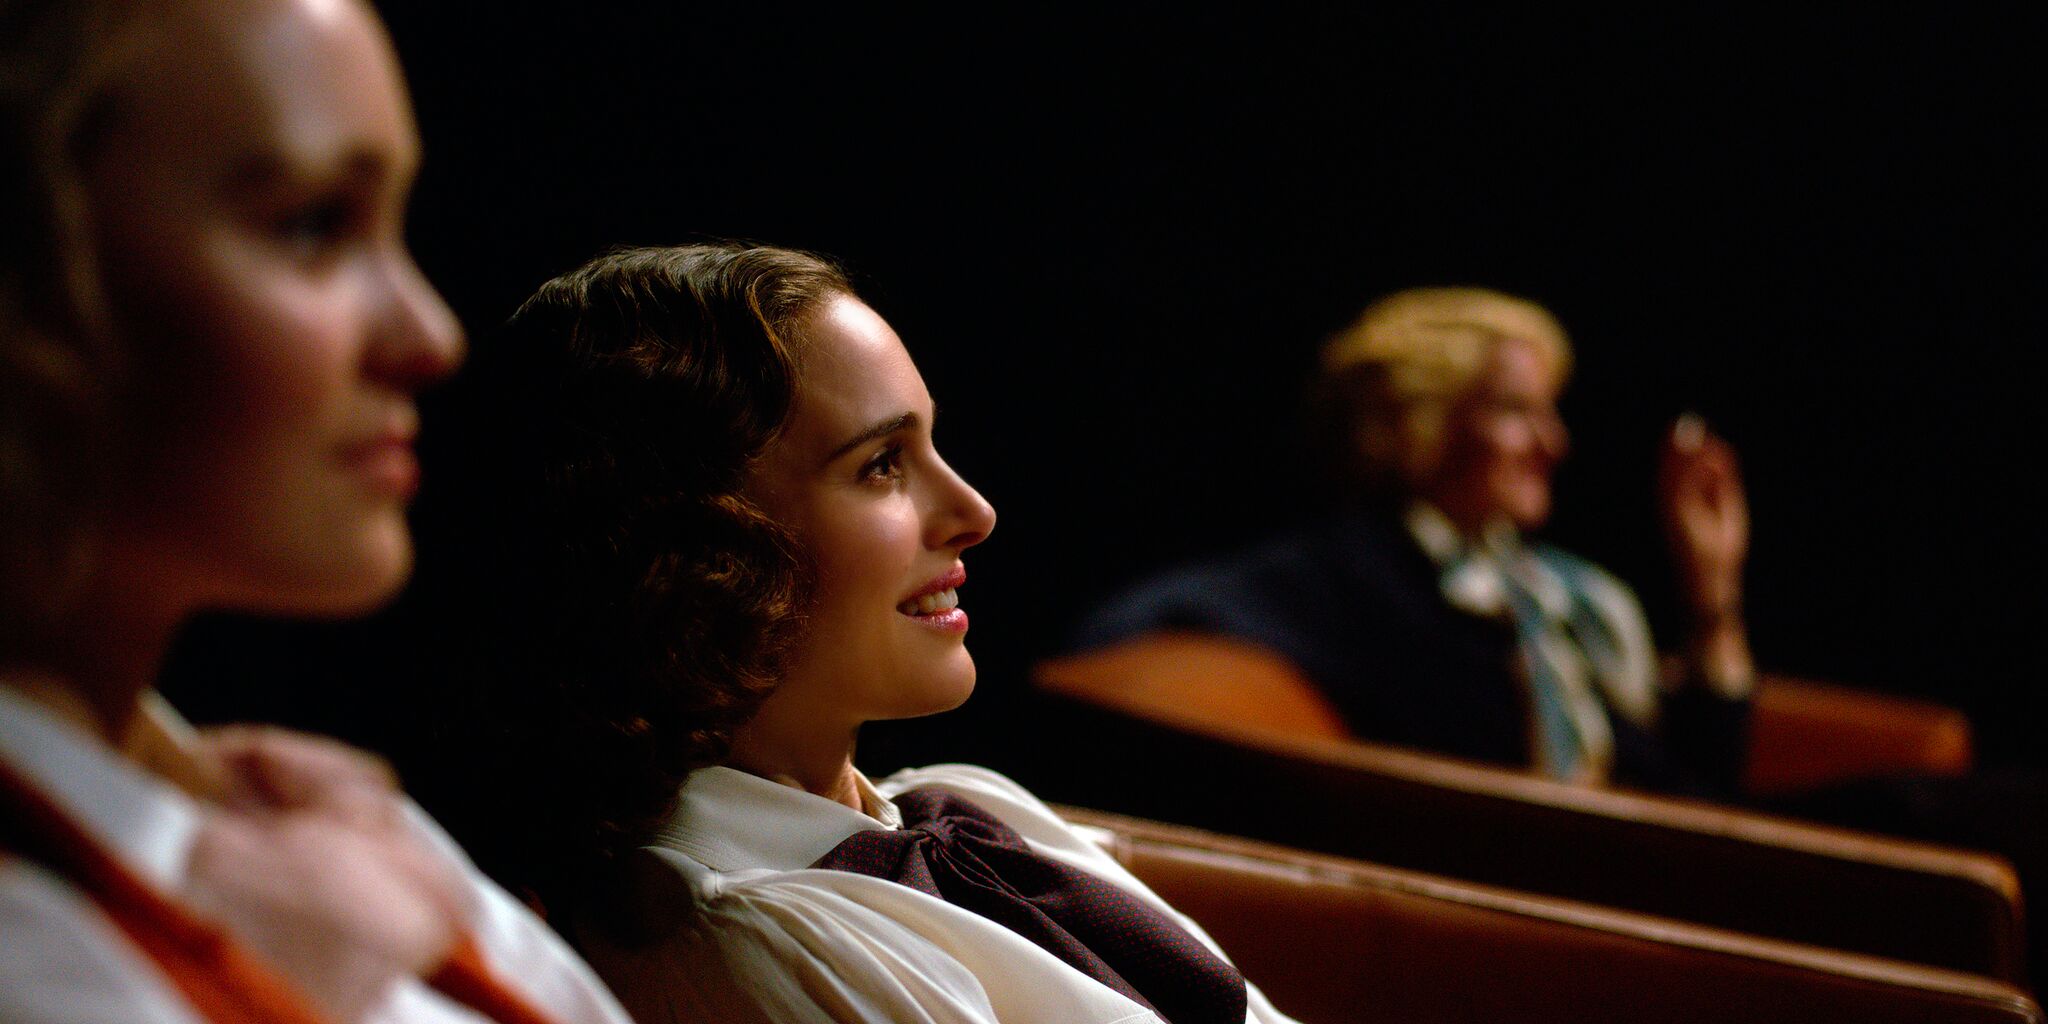 Natalie Portman on Her Character in Planetarium